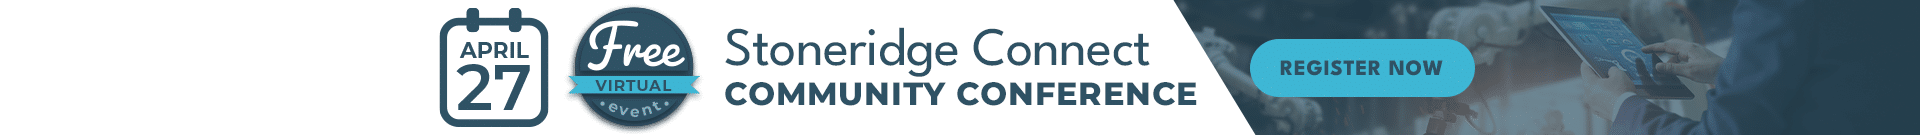 Stoneridge CONNECT Banner copy